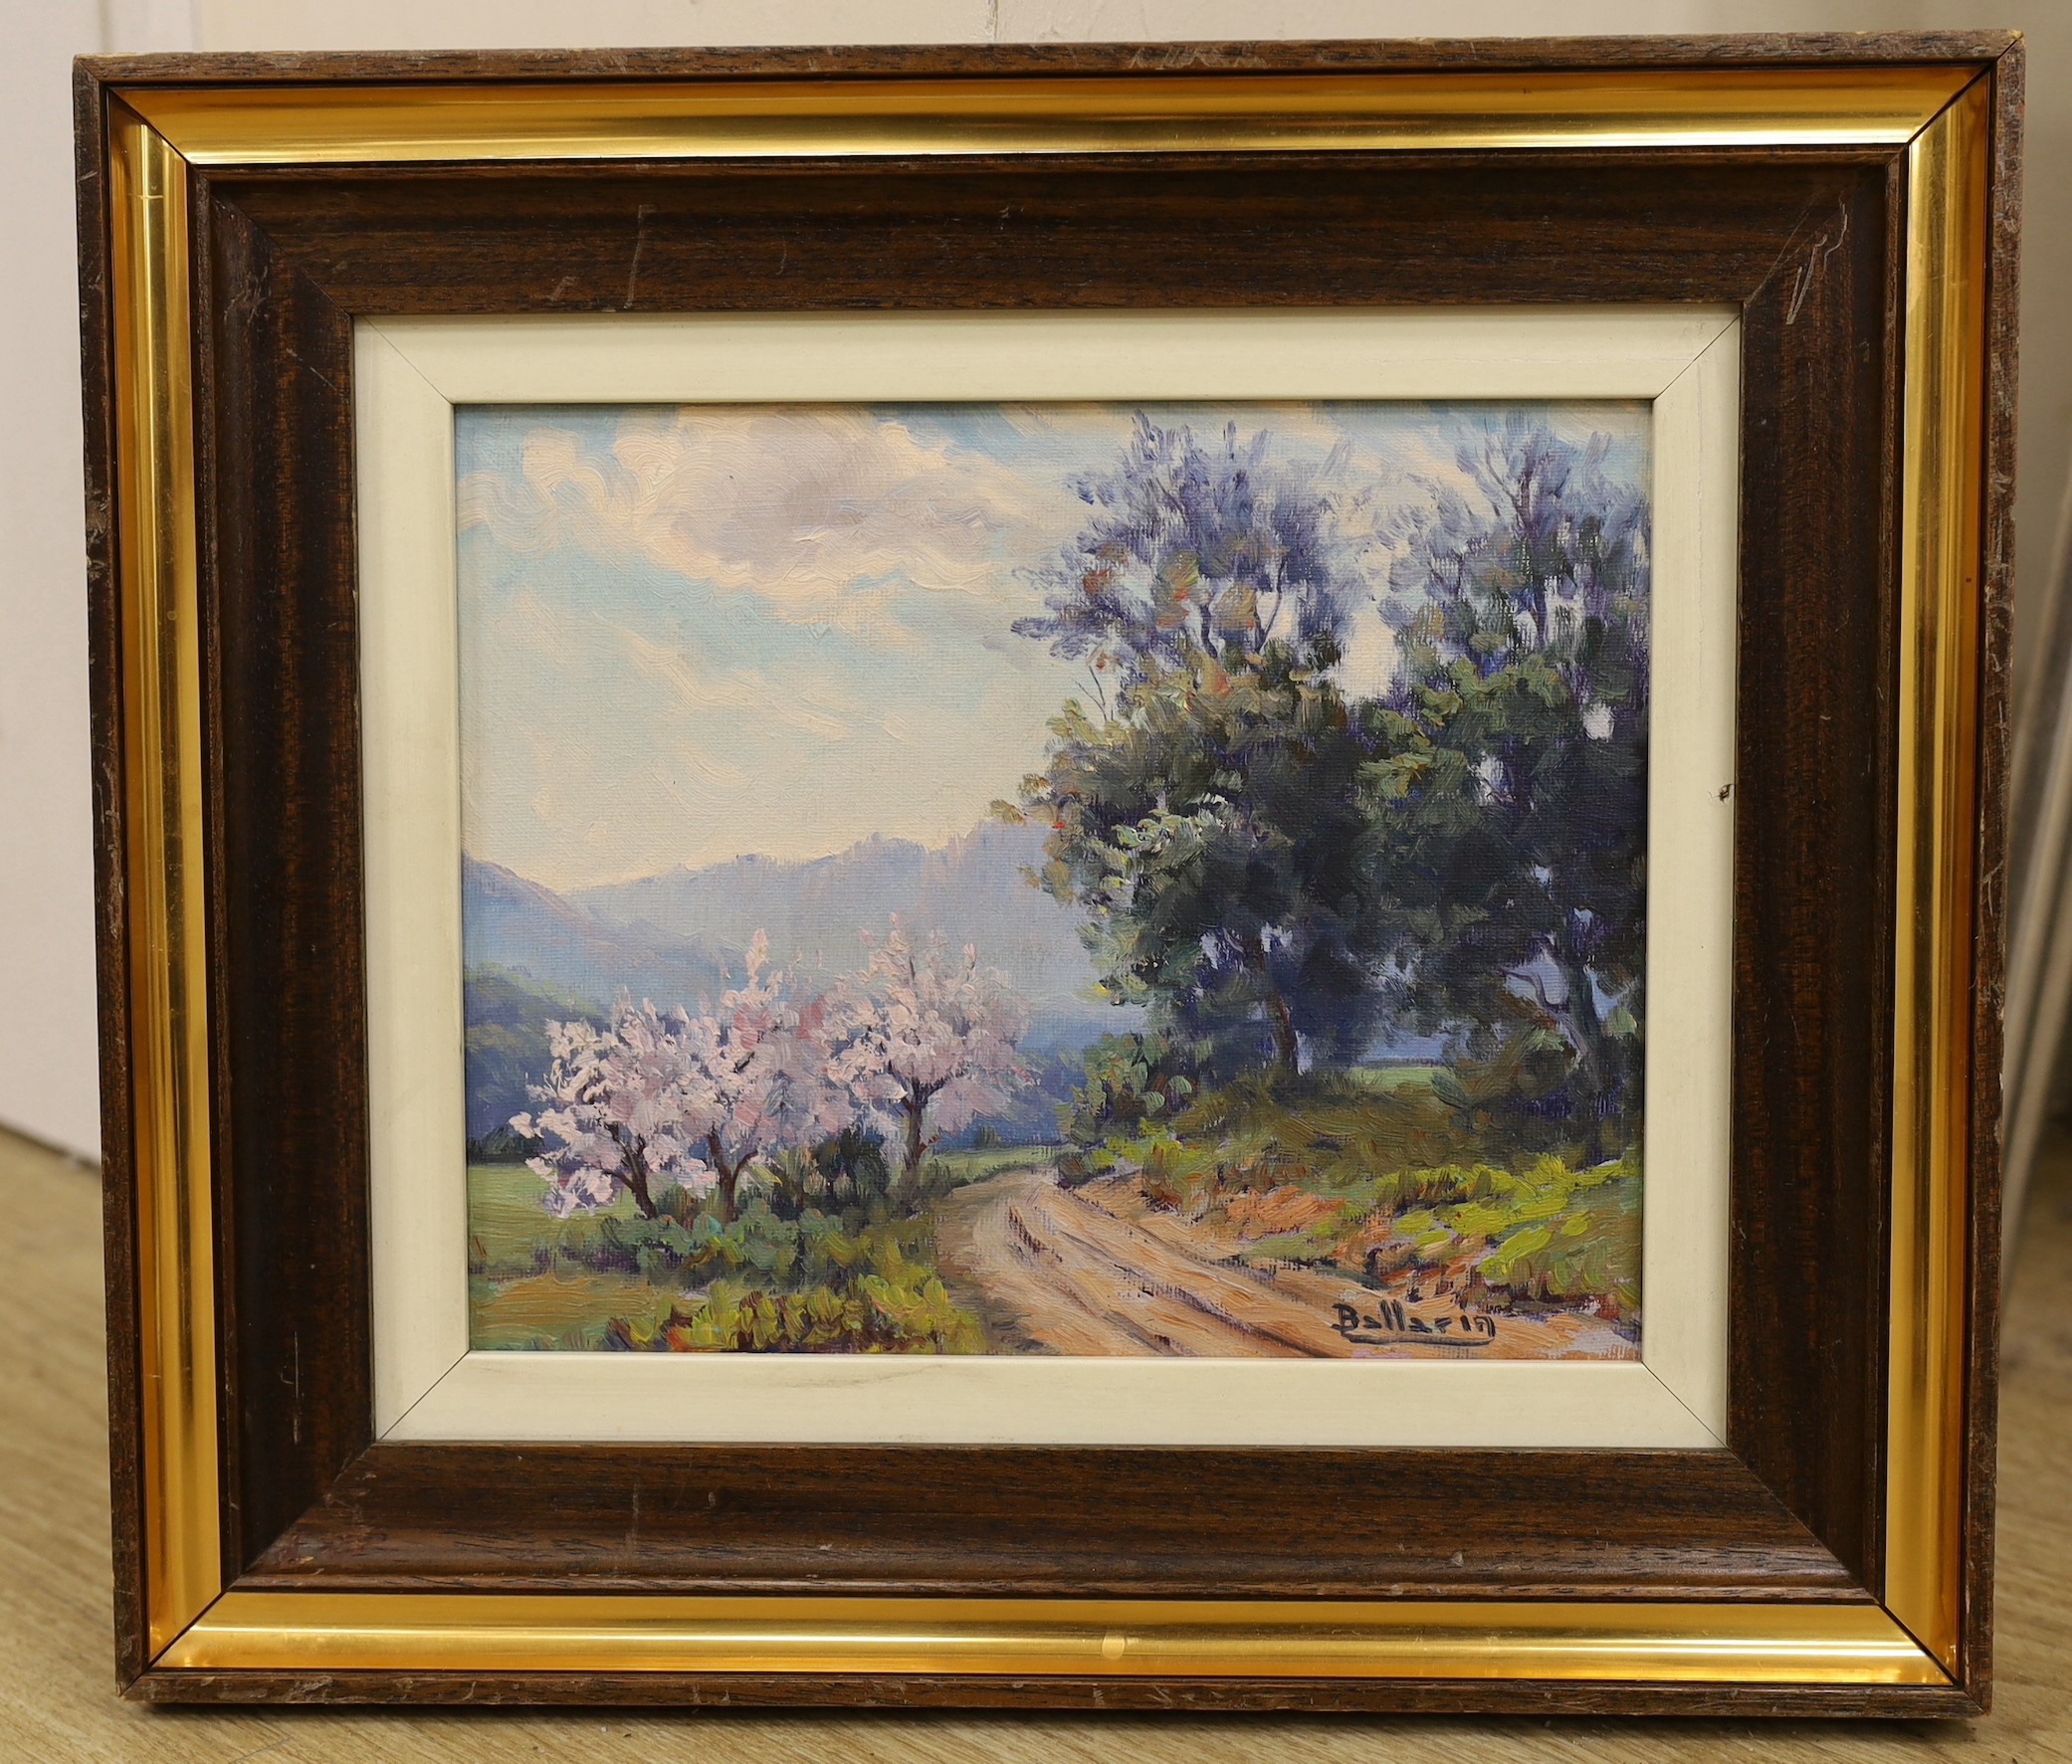 Daniel Grustan Ballarin (1920-2013), oil on canvas, Italian hillside view, signed, 21 x 26cm